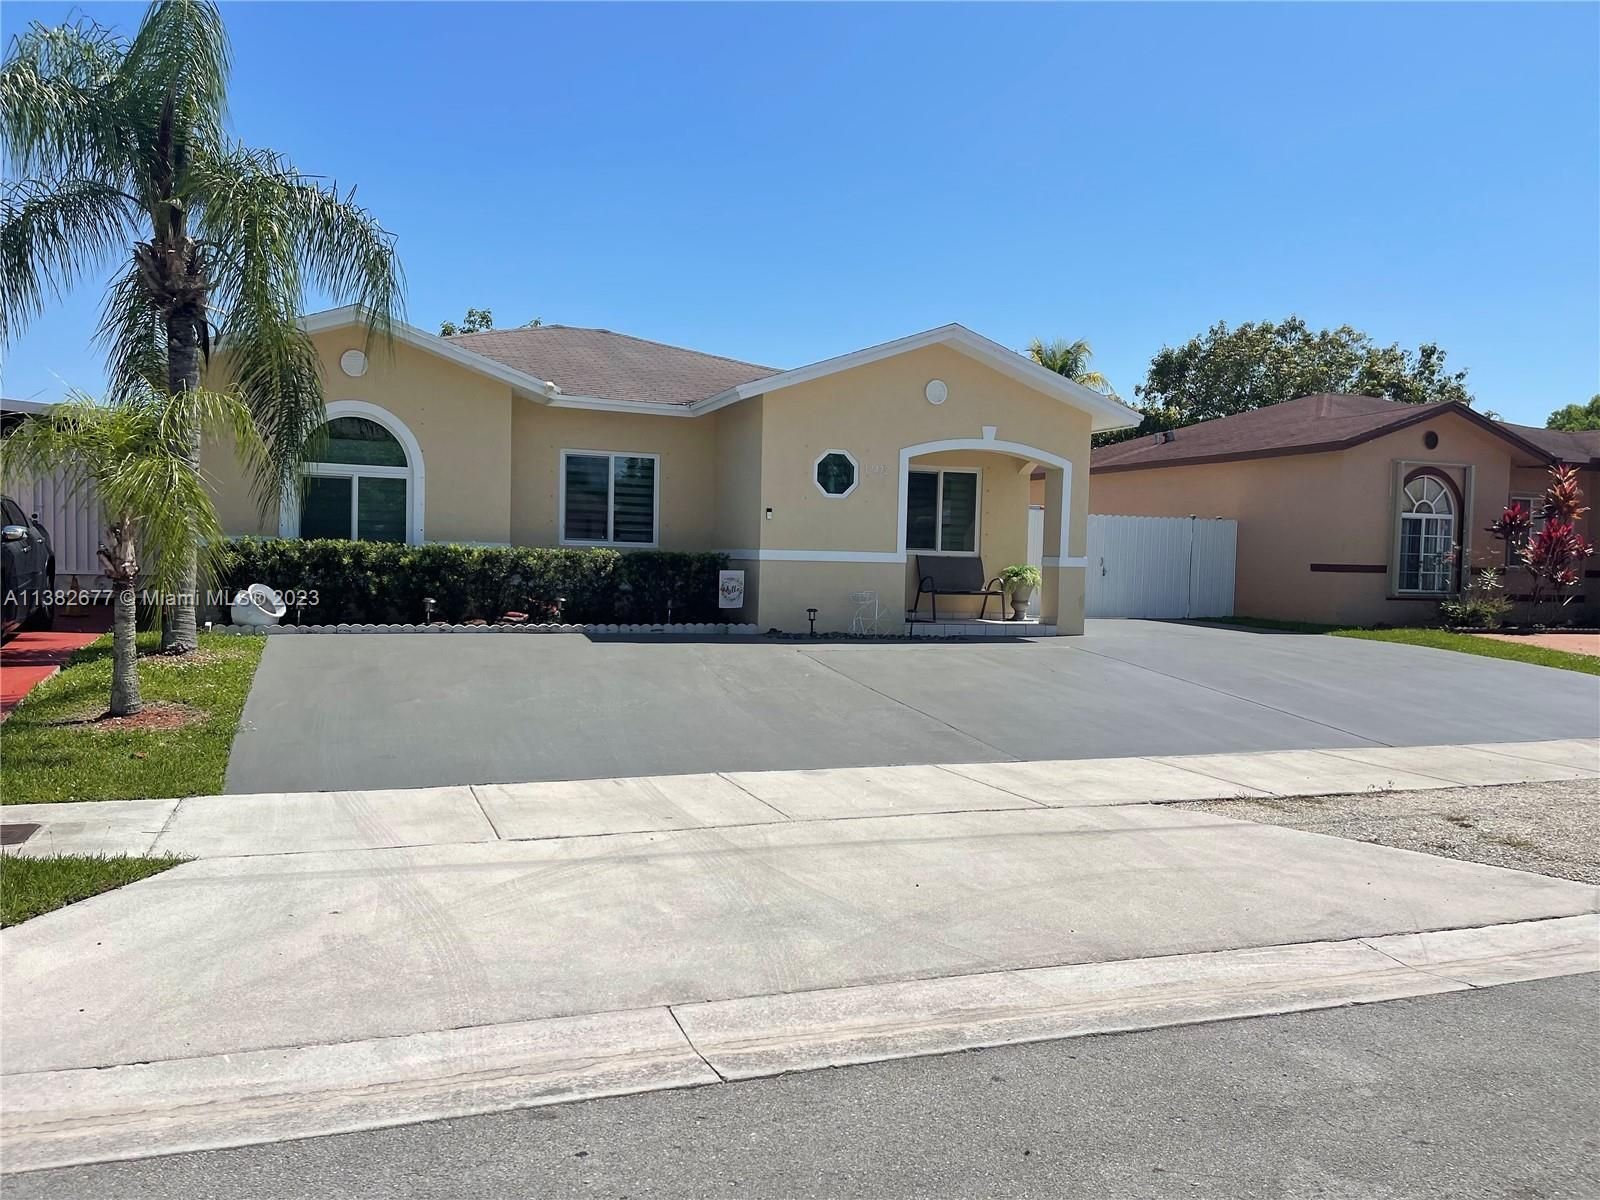 Real estate property located at 12472 196th Ter, Miami-Dade County, Miami, FL